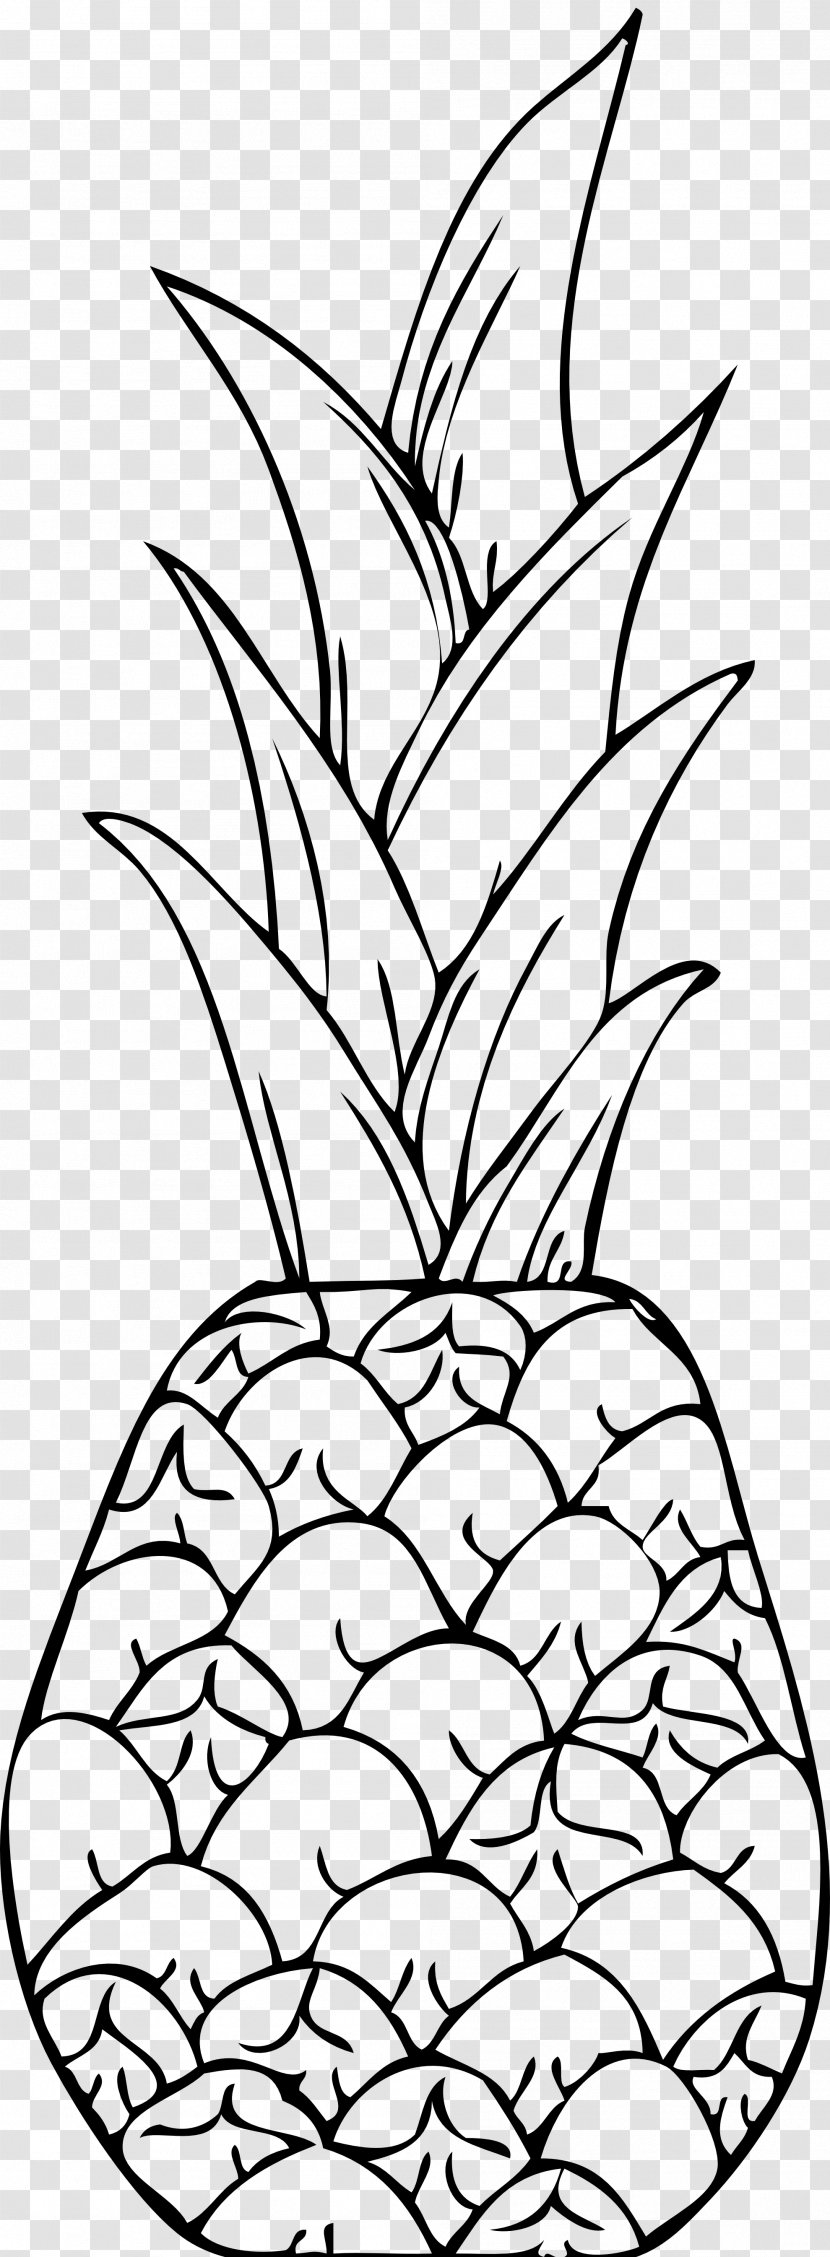 Pineapple Drawing Clip Art - Monochrome Transparent PNG